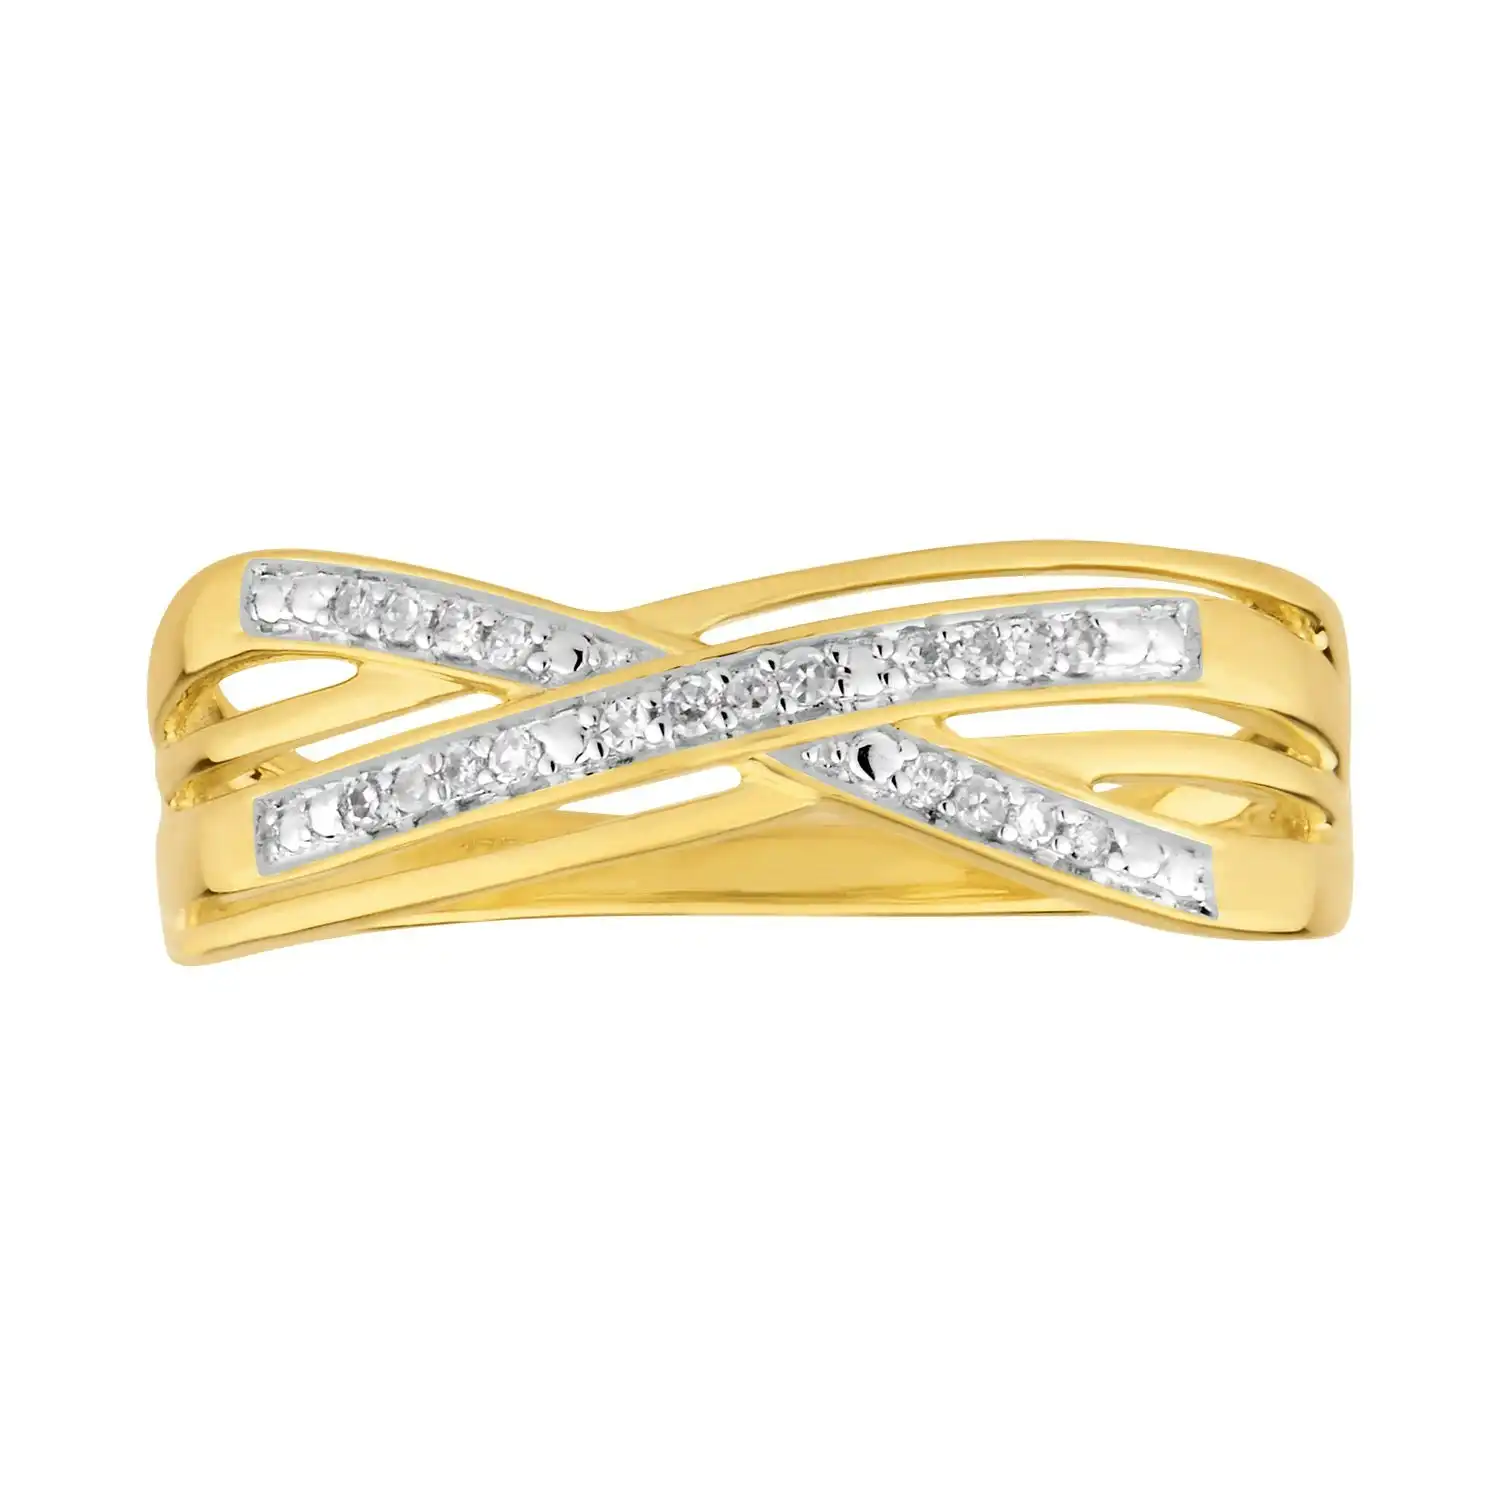 9ct Yellow Gold Diamond Ring with 20 Brilliant Diamonds